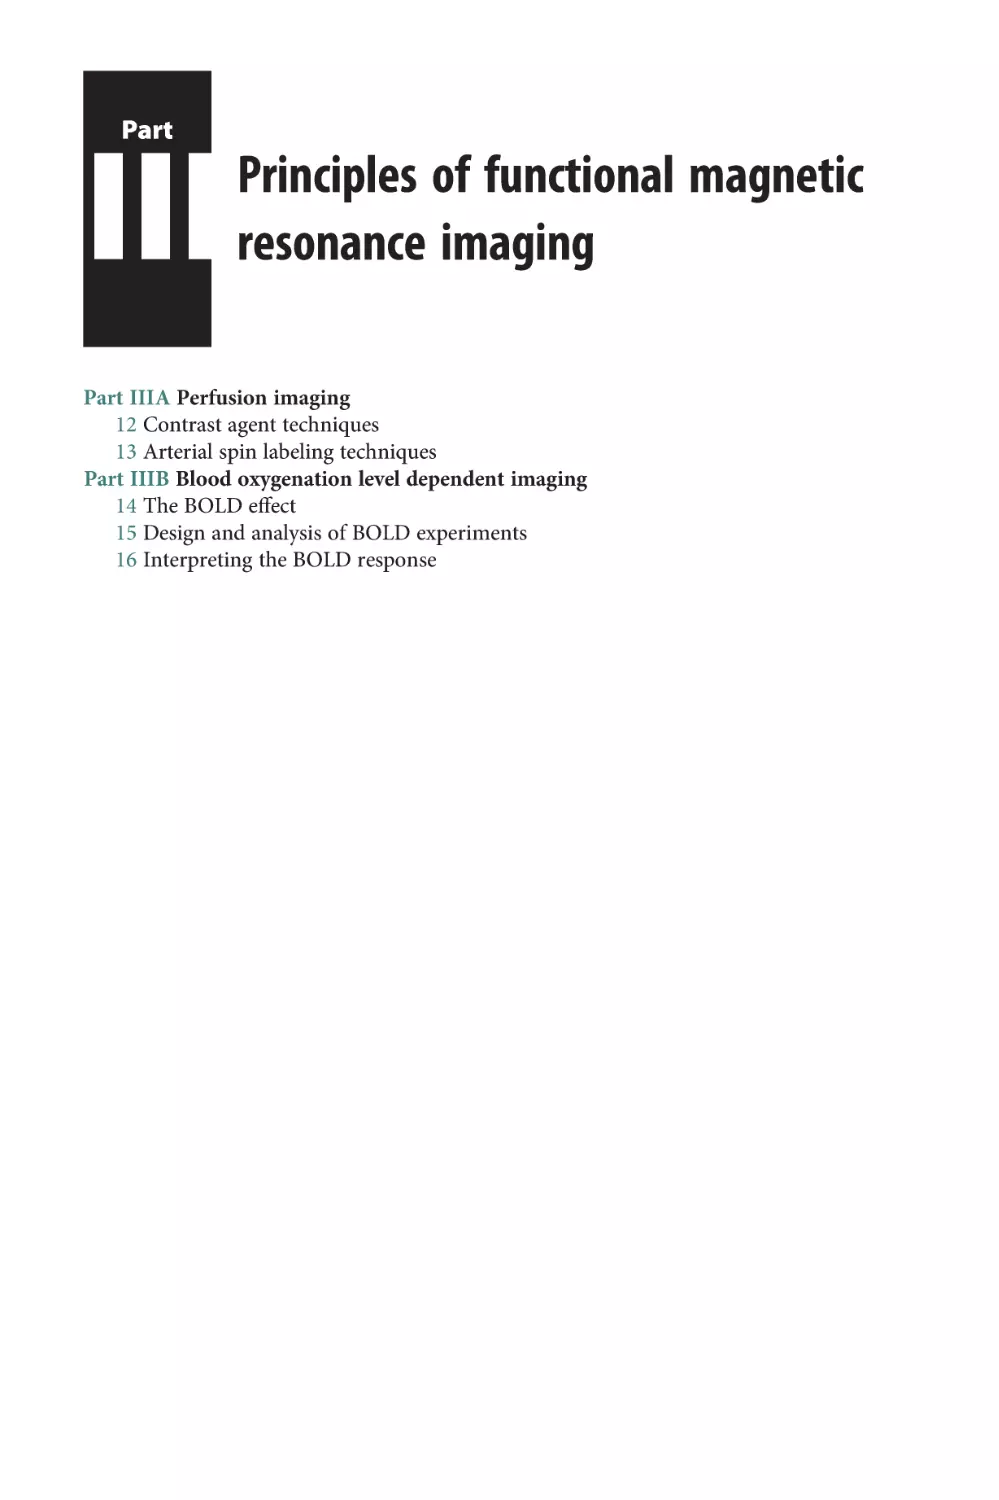 Part III Principles of functional magnetic resonance imaging